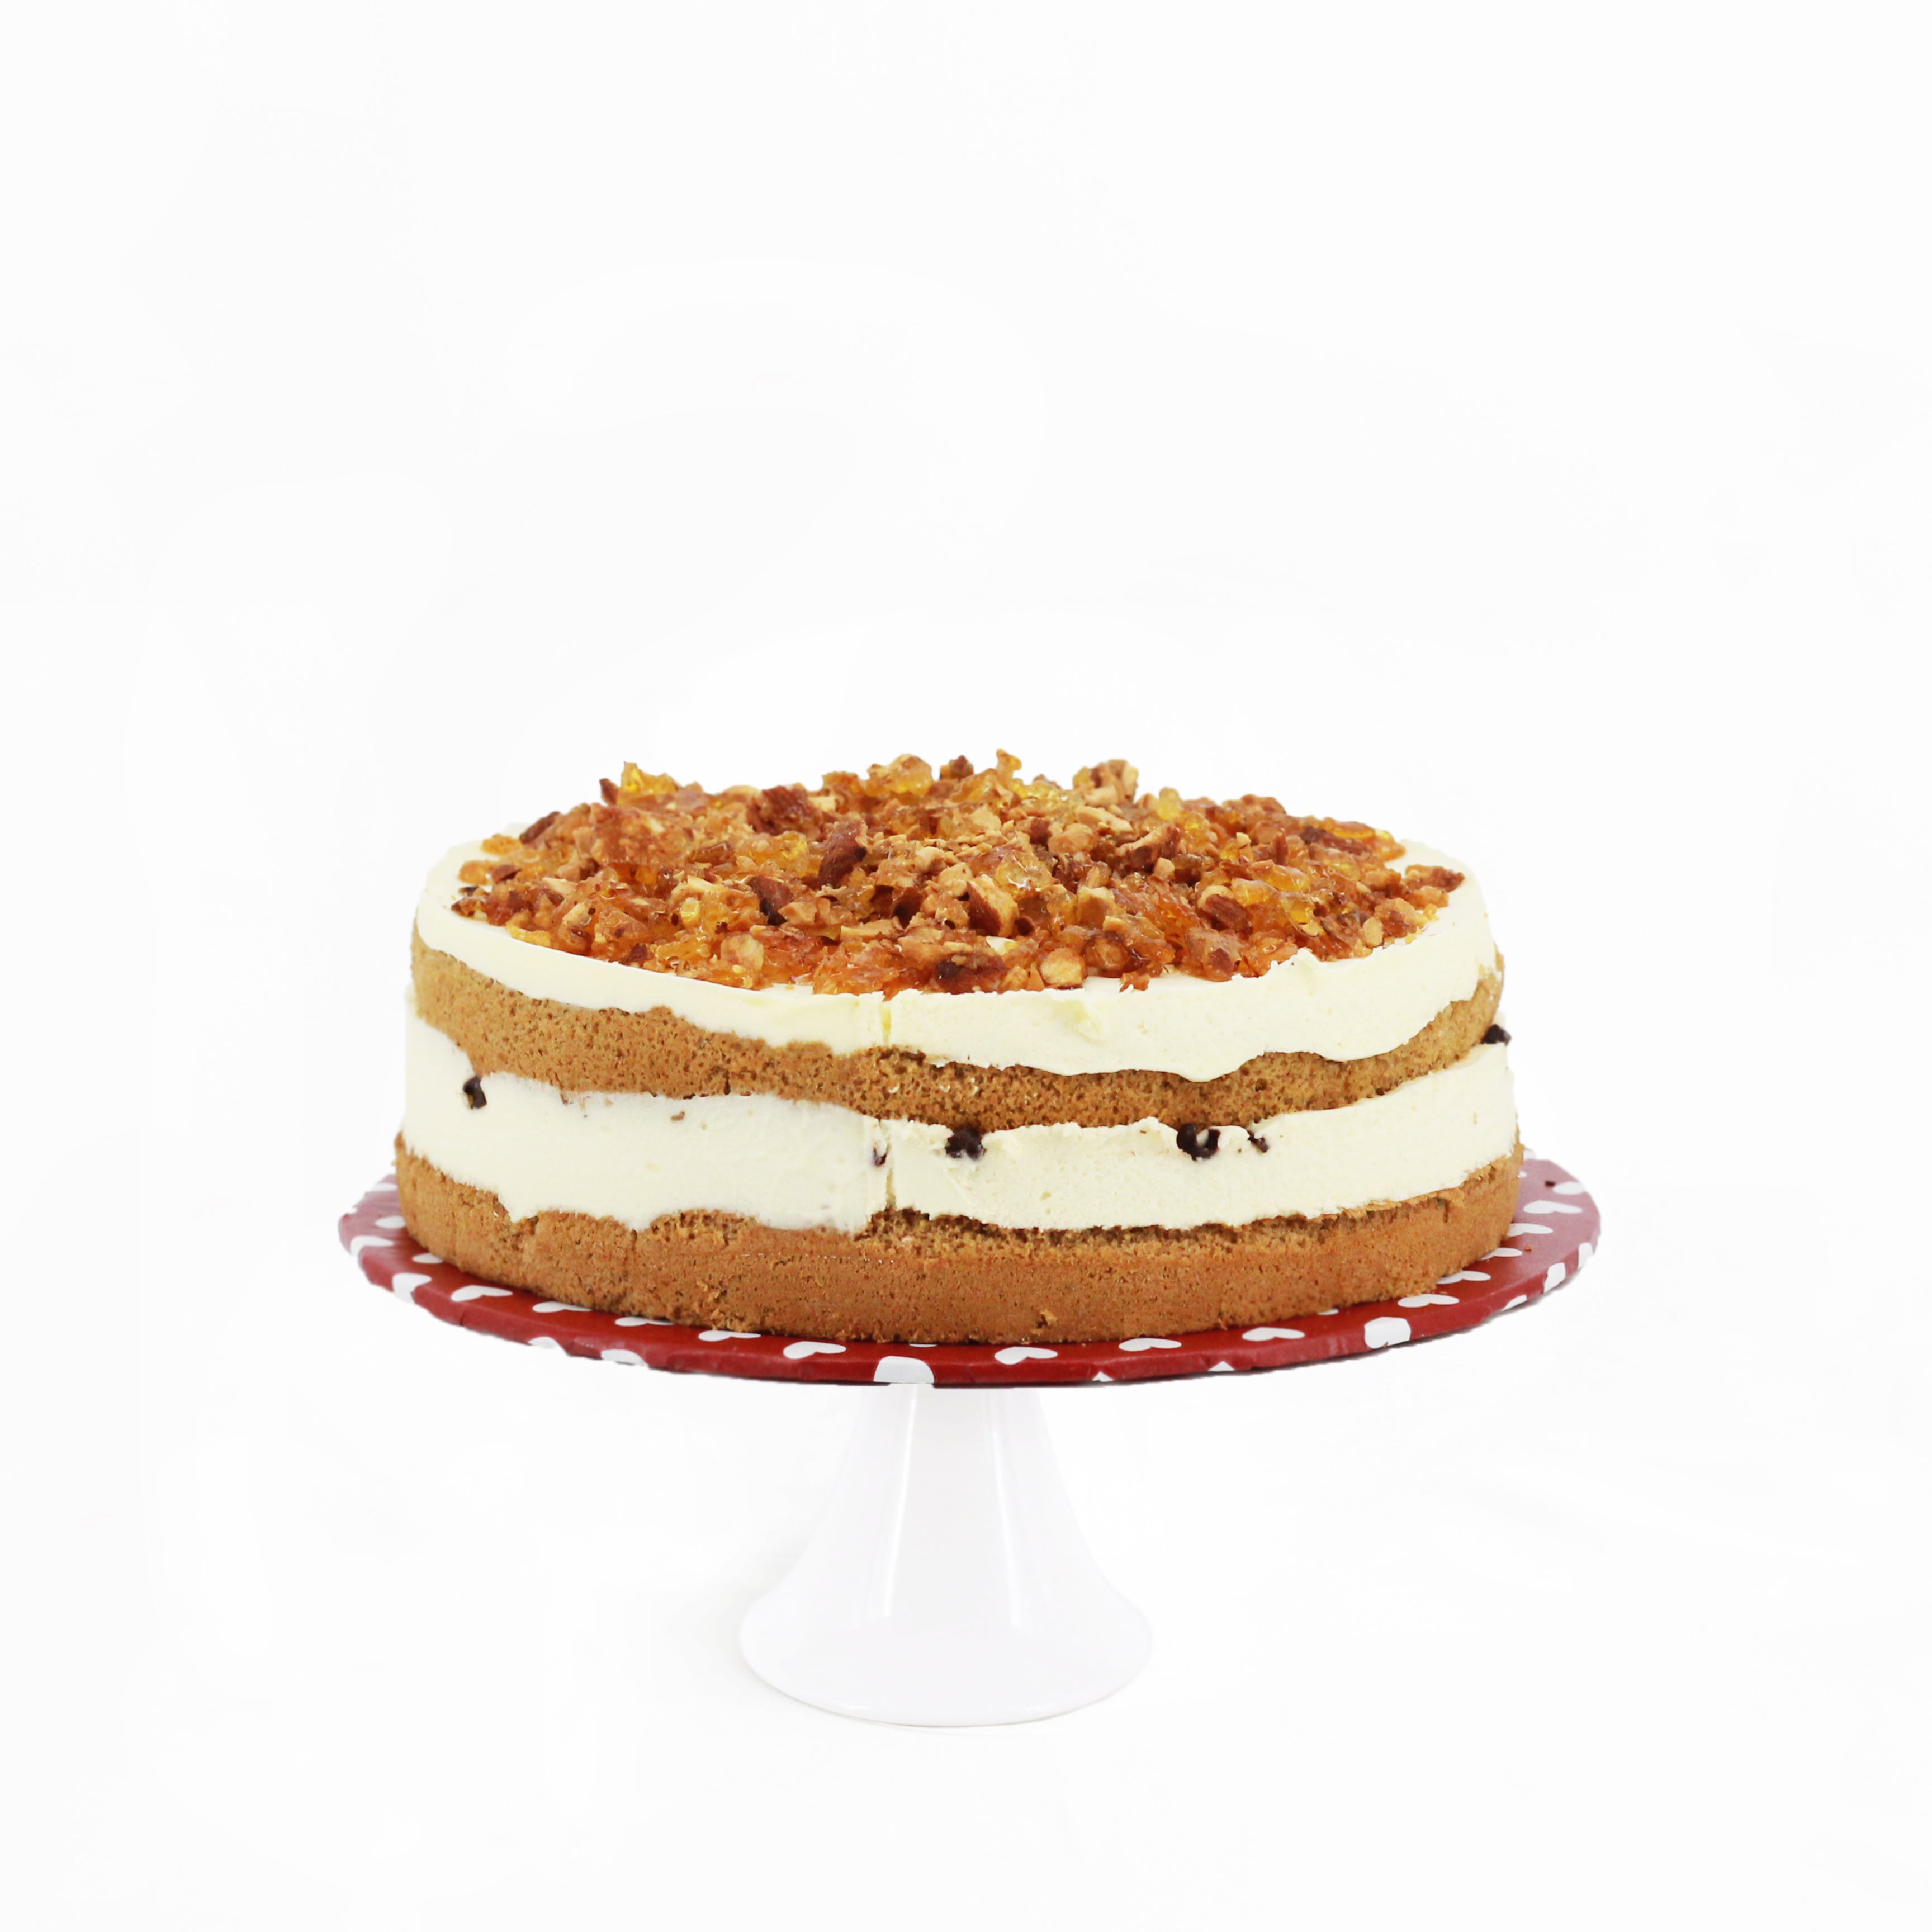 Almond praline vanilla cake with meringue frosting - HORNO MX